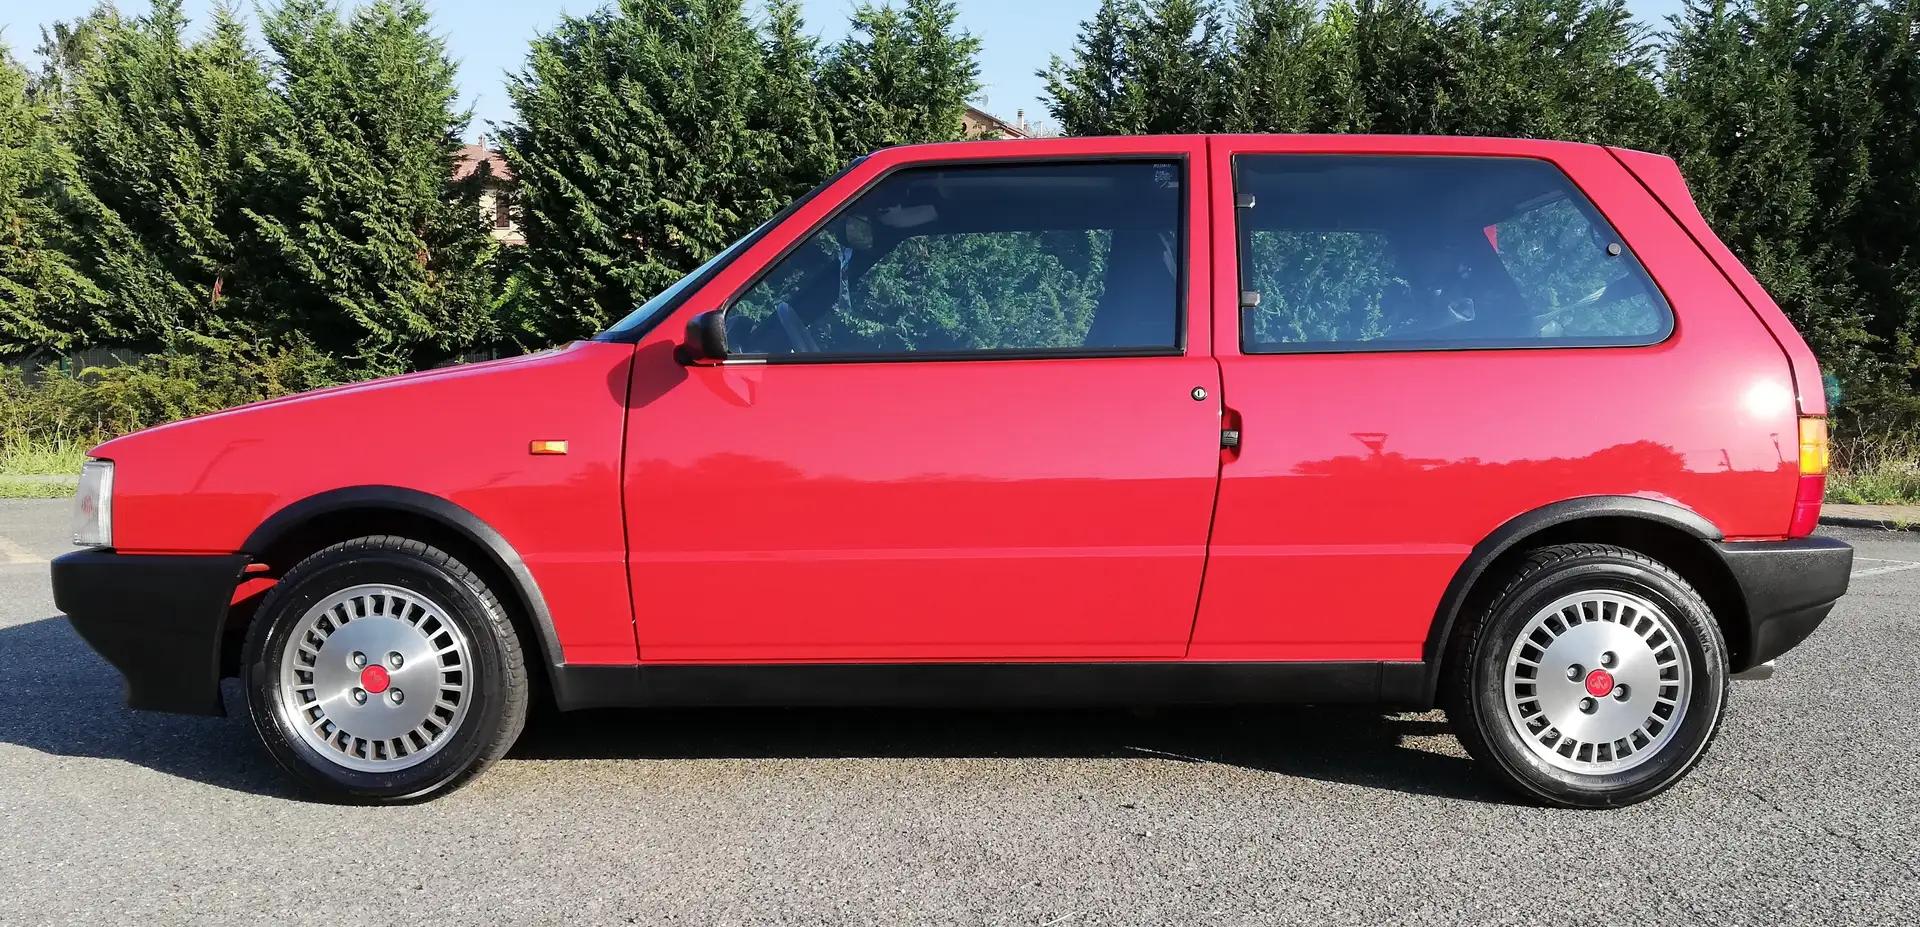 Fiat Uno Turbo ie - 1